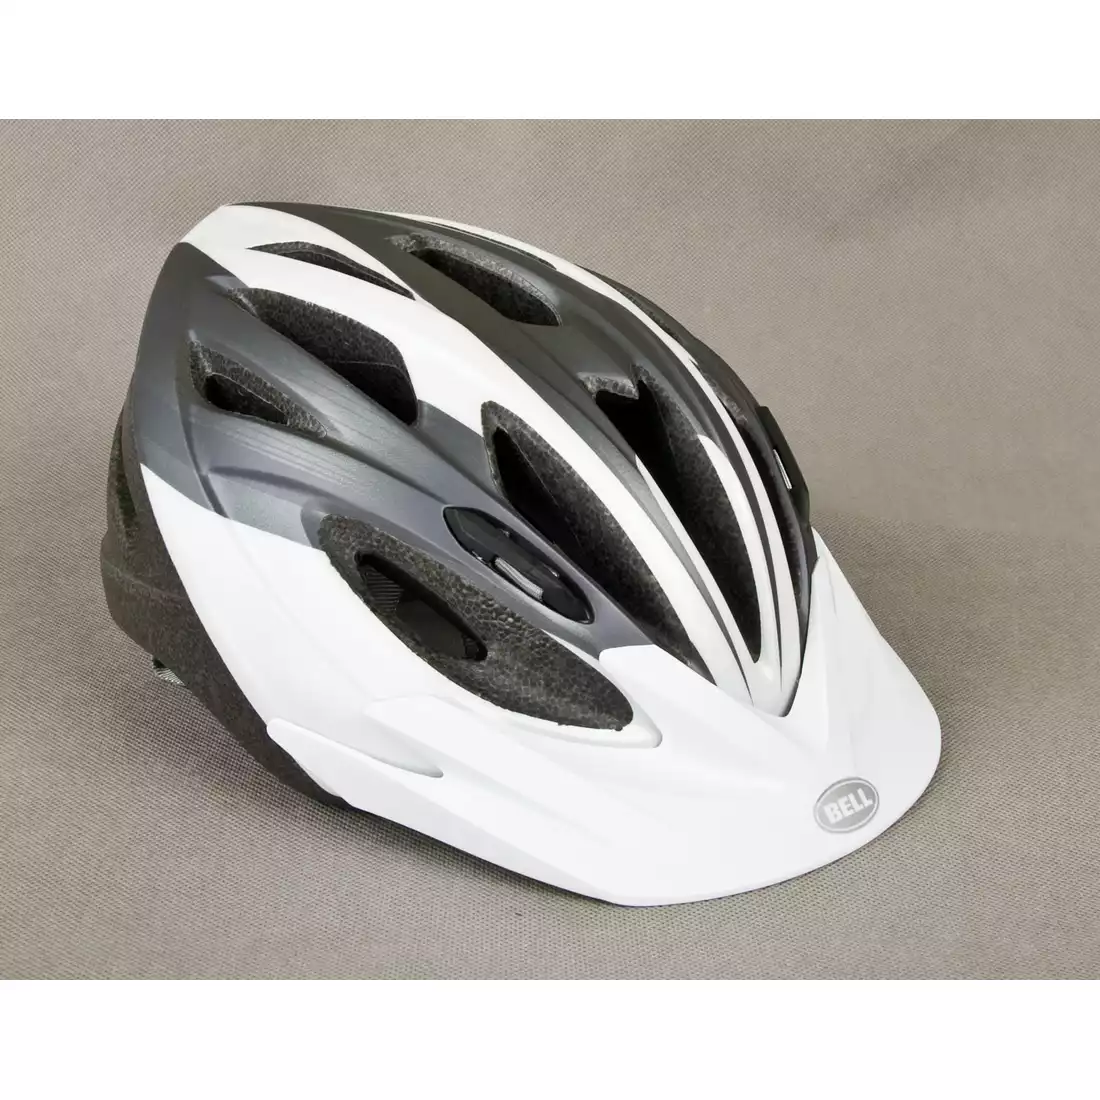 BELL PRESIDIO - kask rowerowy, kolor: Biało-srebrny